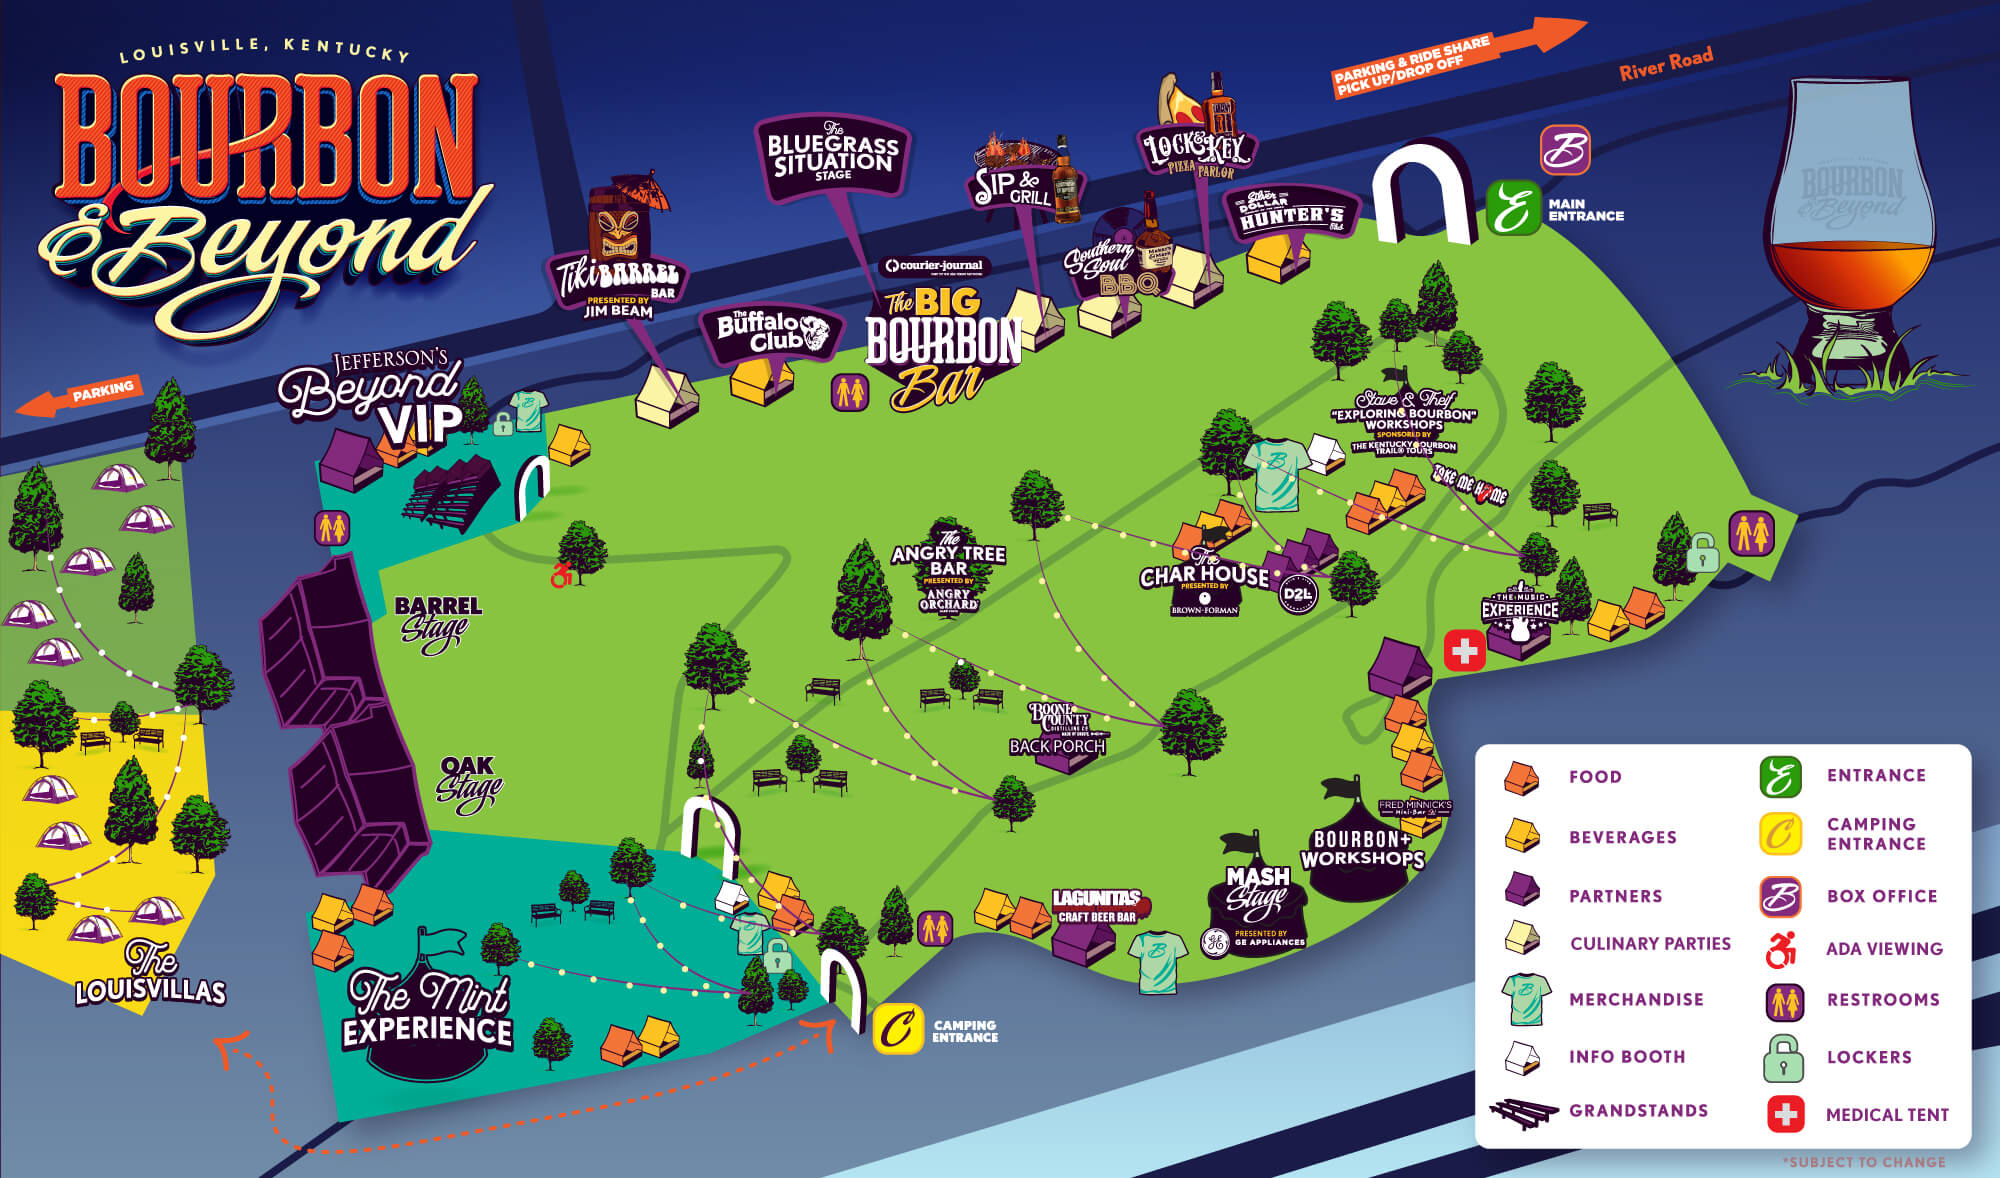 Bourbon & Beyond Festival Map